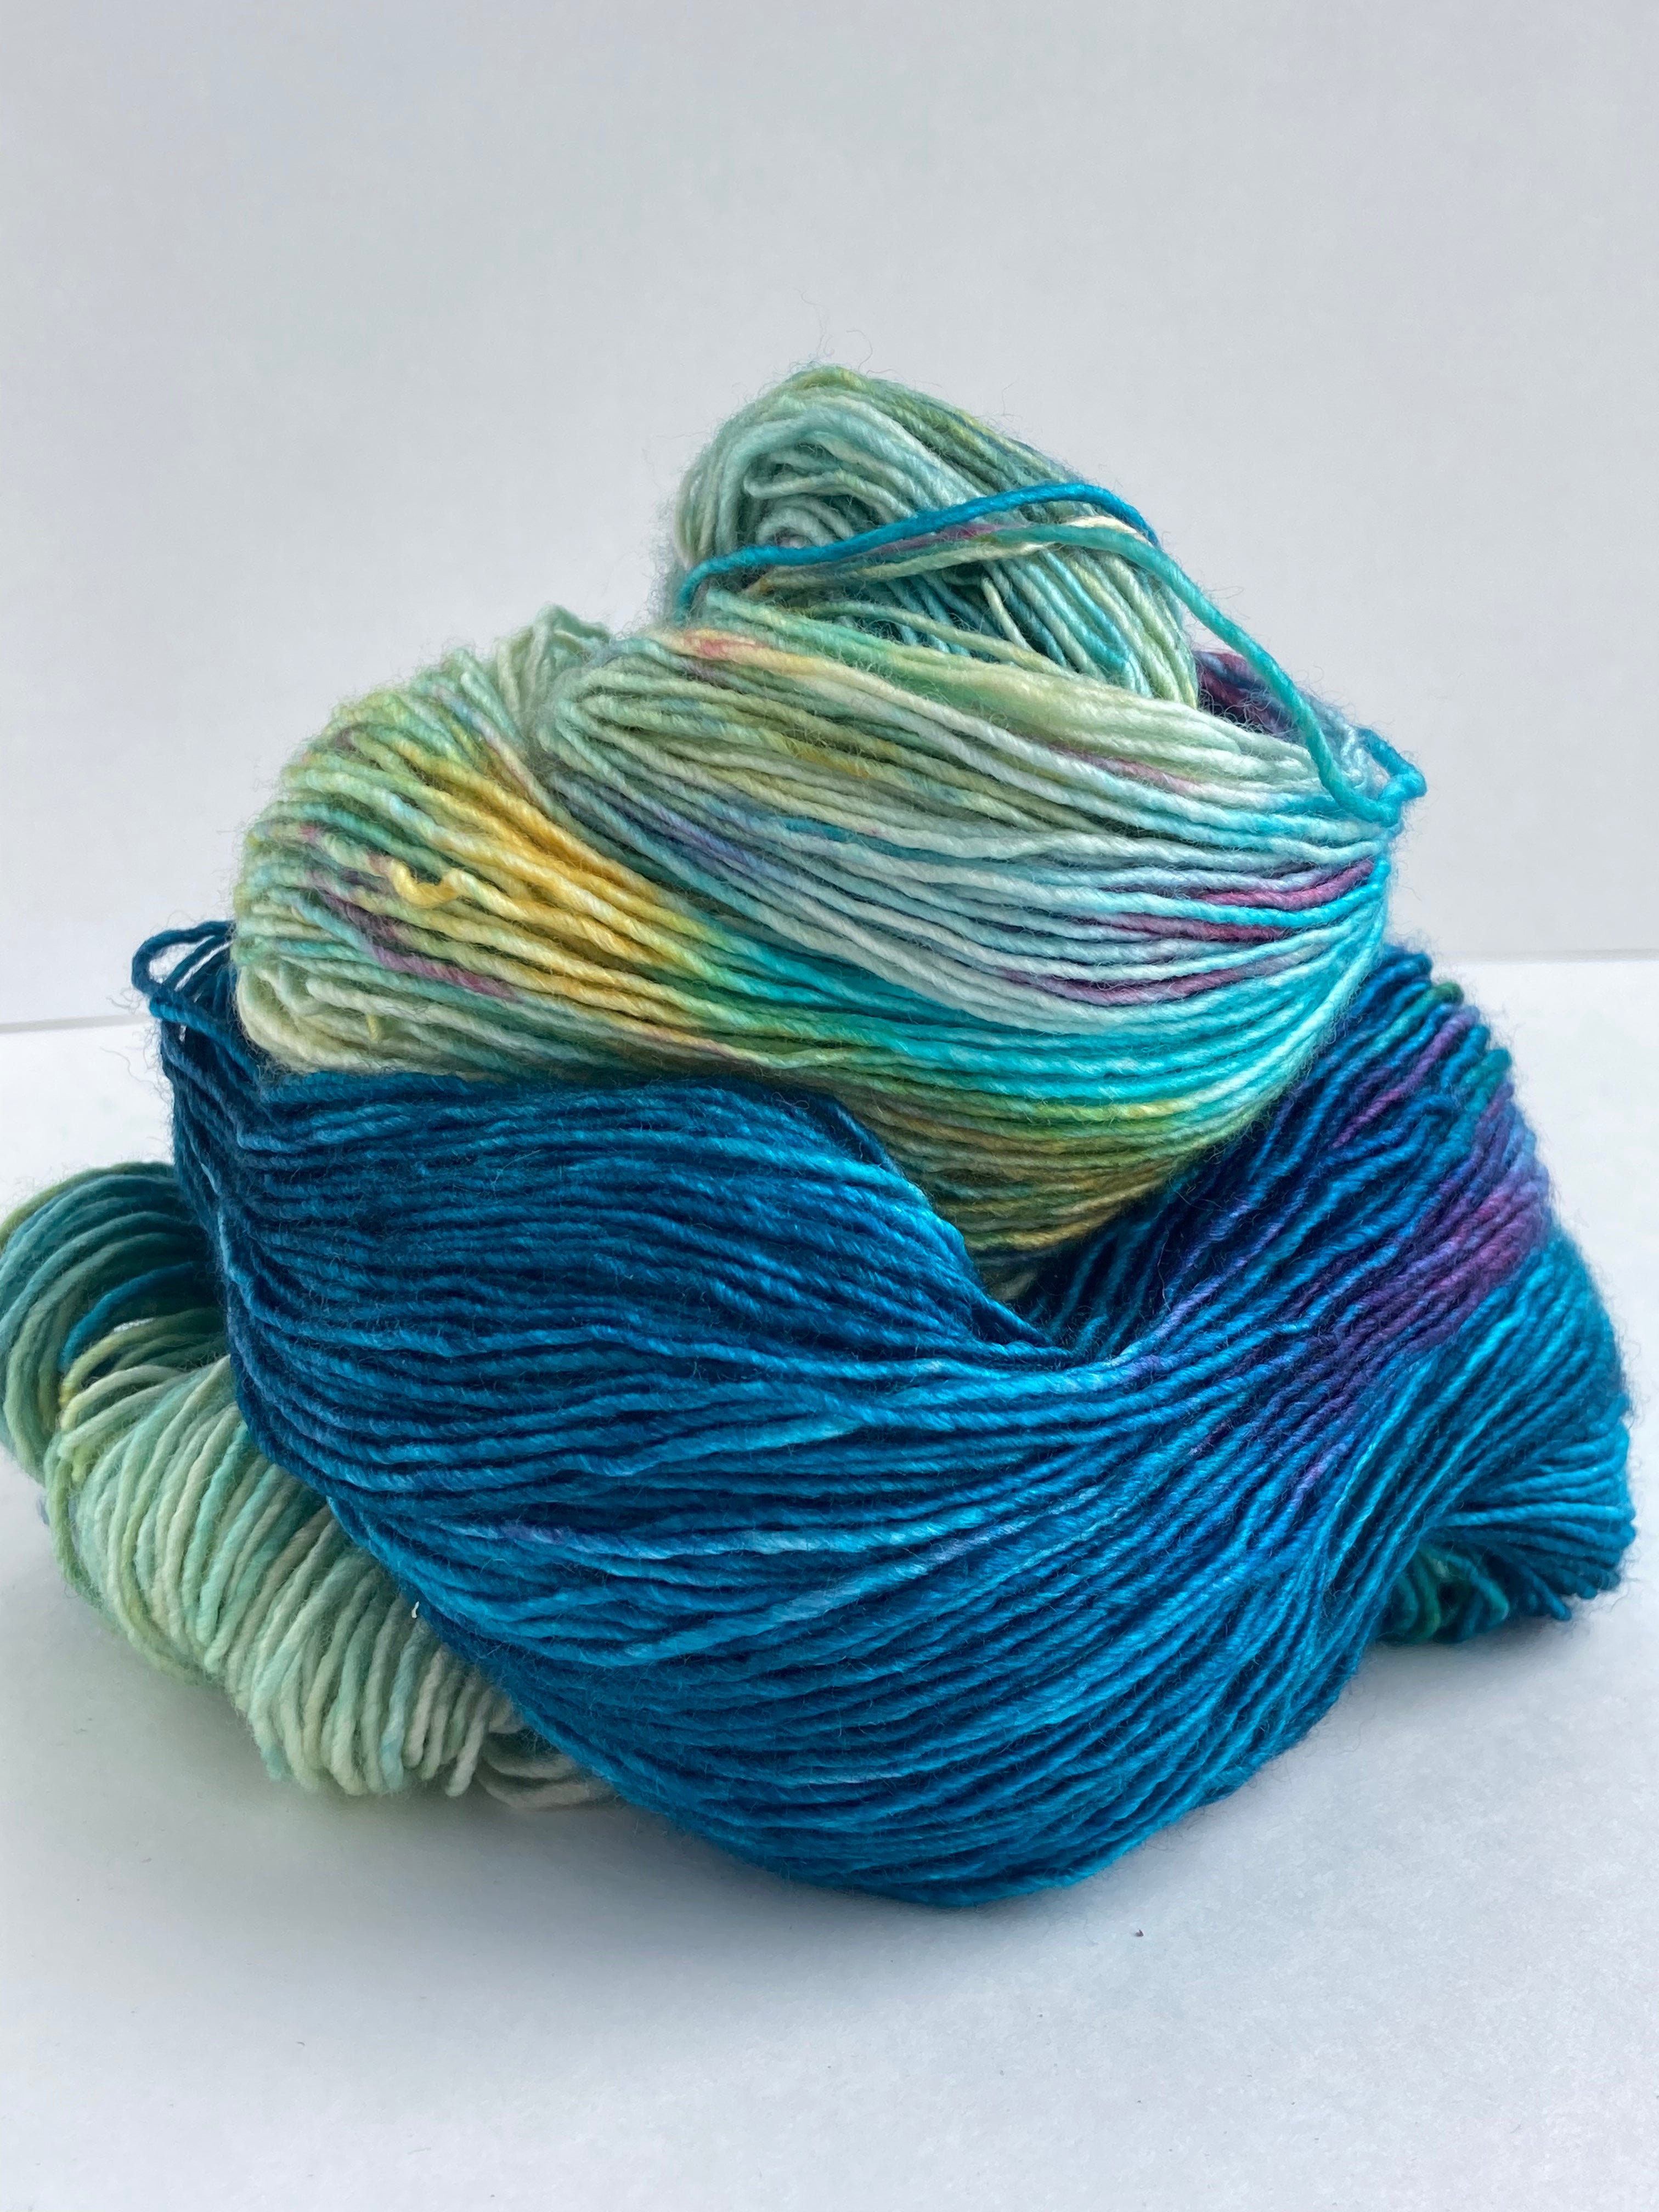 Helena - River Silk and Merino from Tributary Yarns